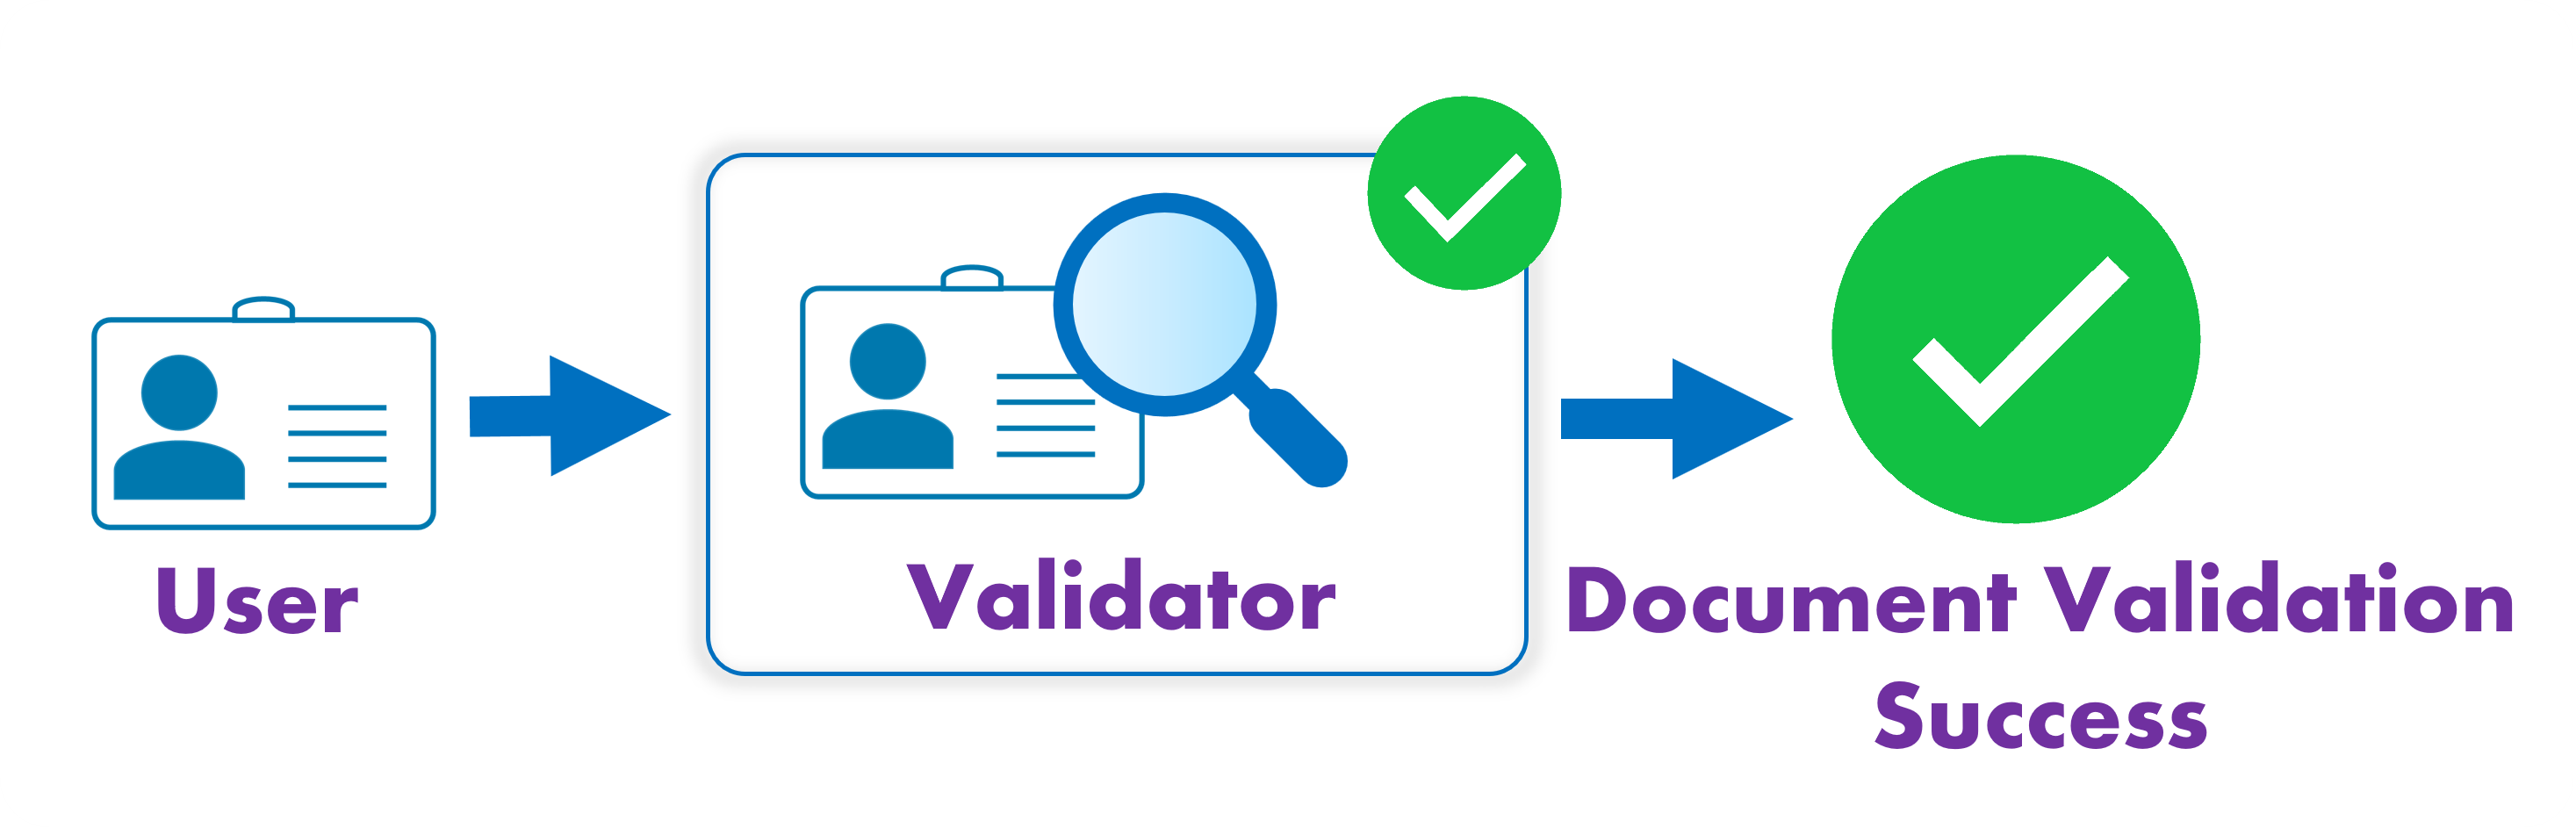 doc_validation